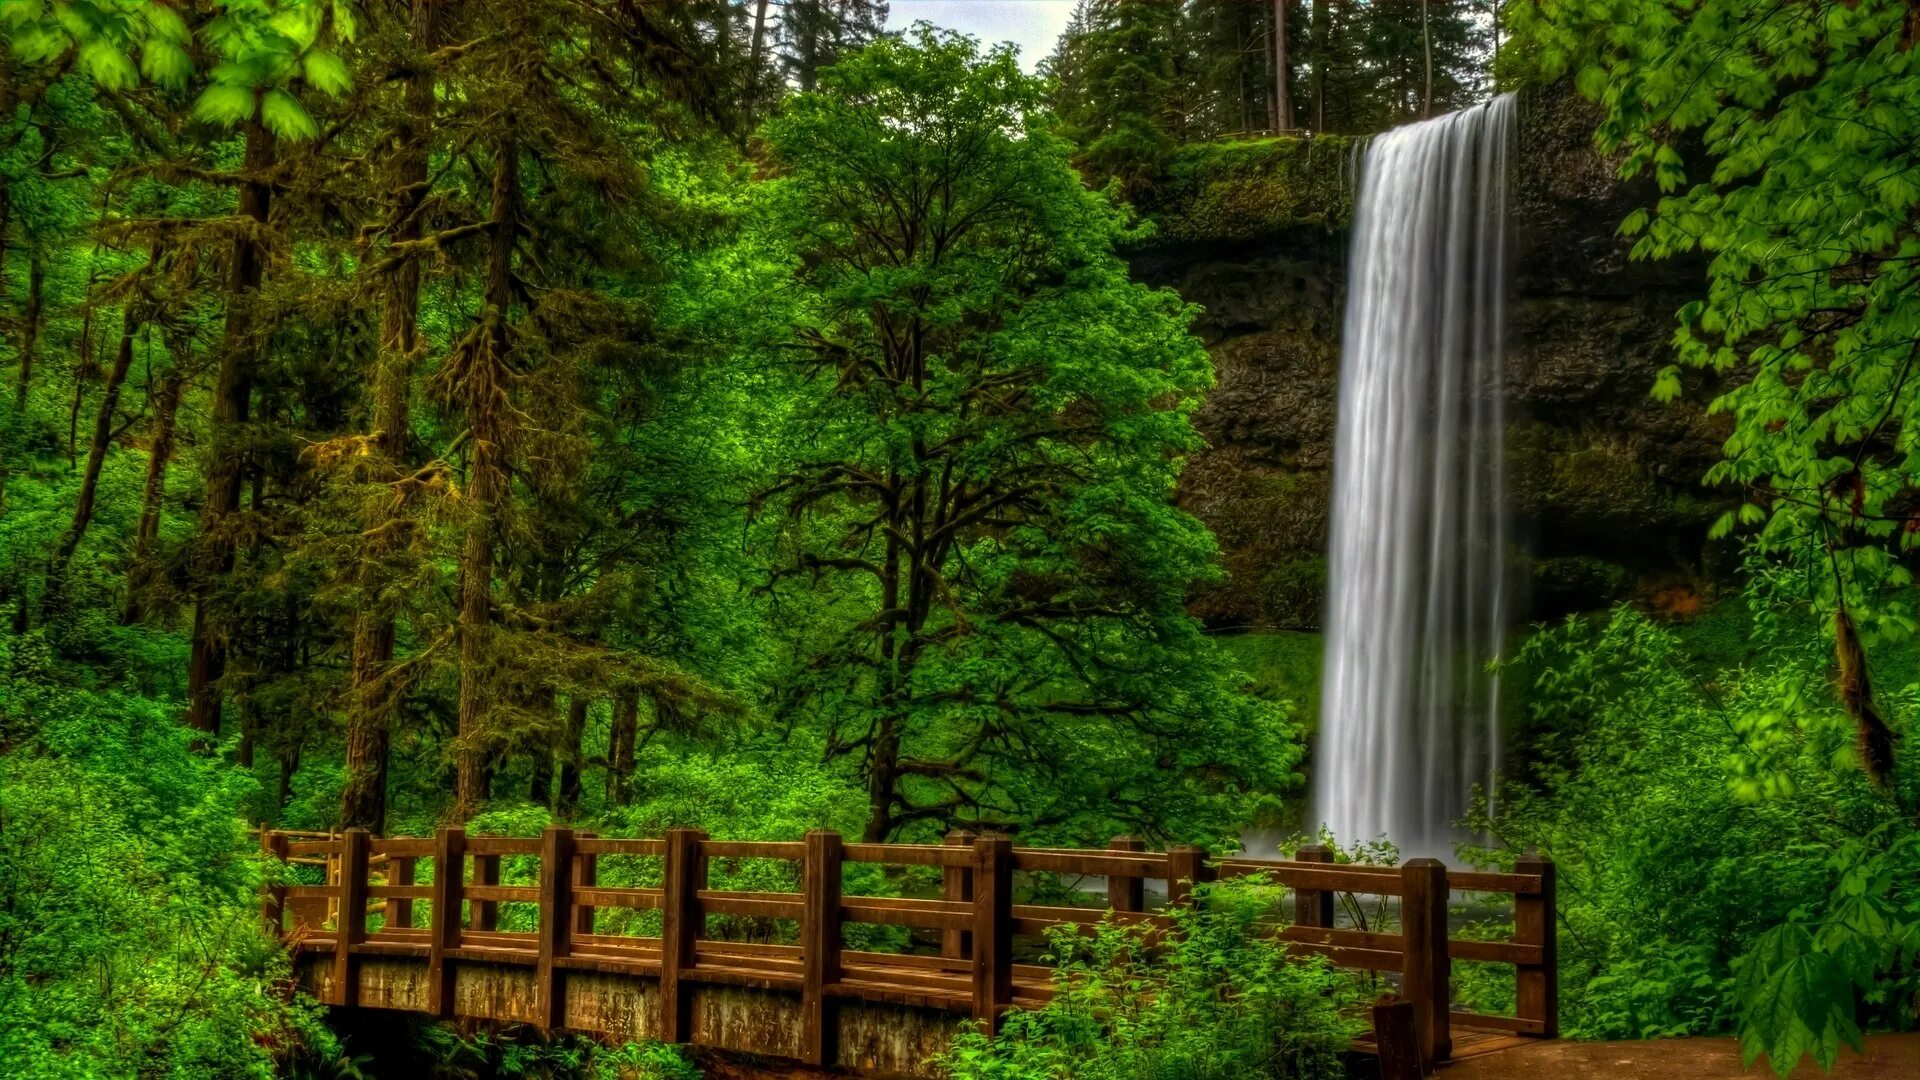 Natural view. Природа. Водопад в лесу. Лесной водопад. Природа с деревьями и водопадами.